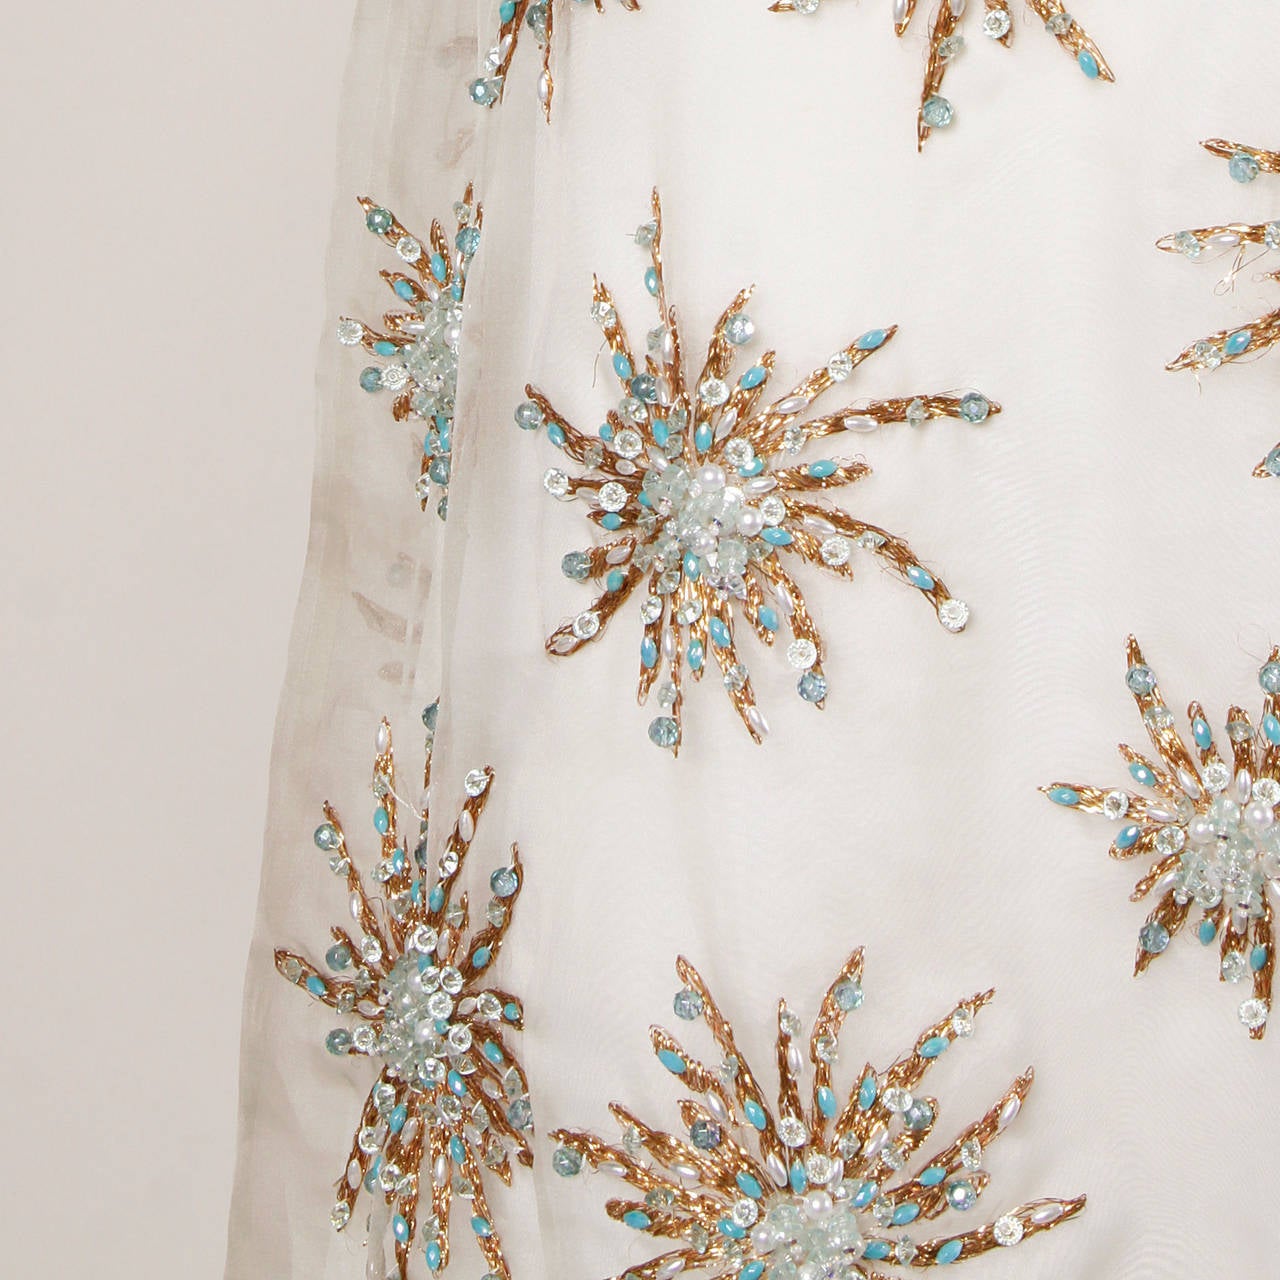 1960s Unworn Vintage Silk Embellished Shift Dress with Original Tags Attached 1